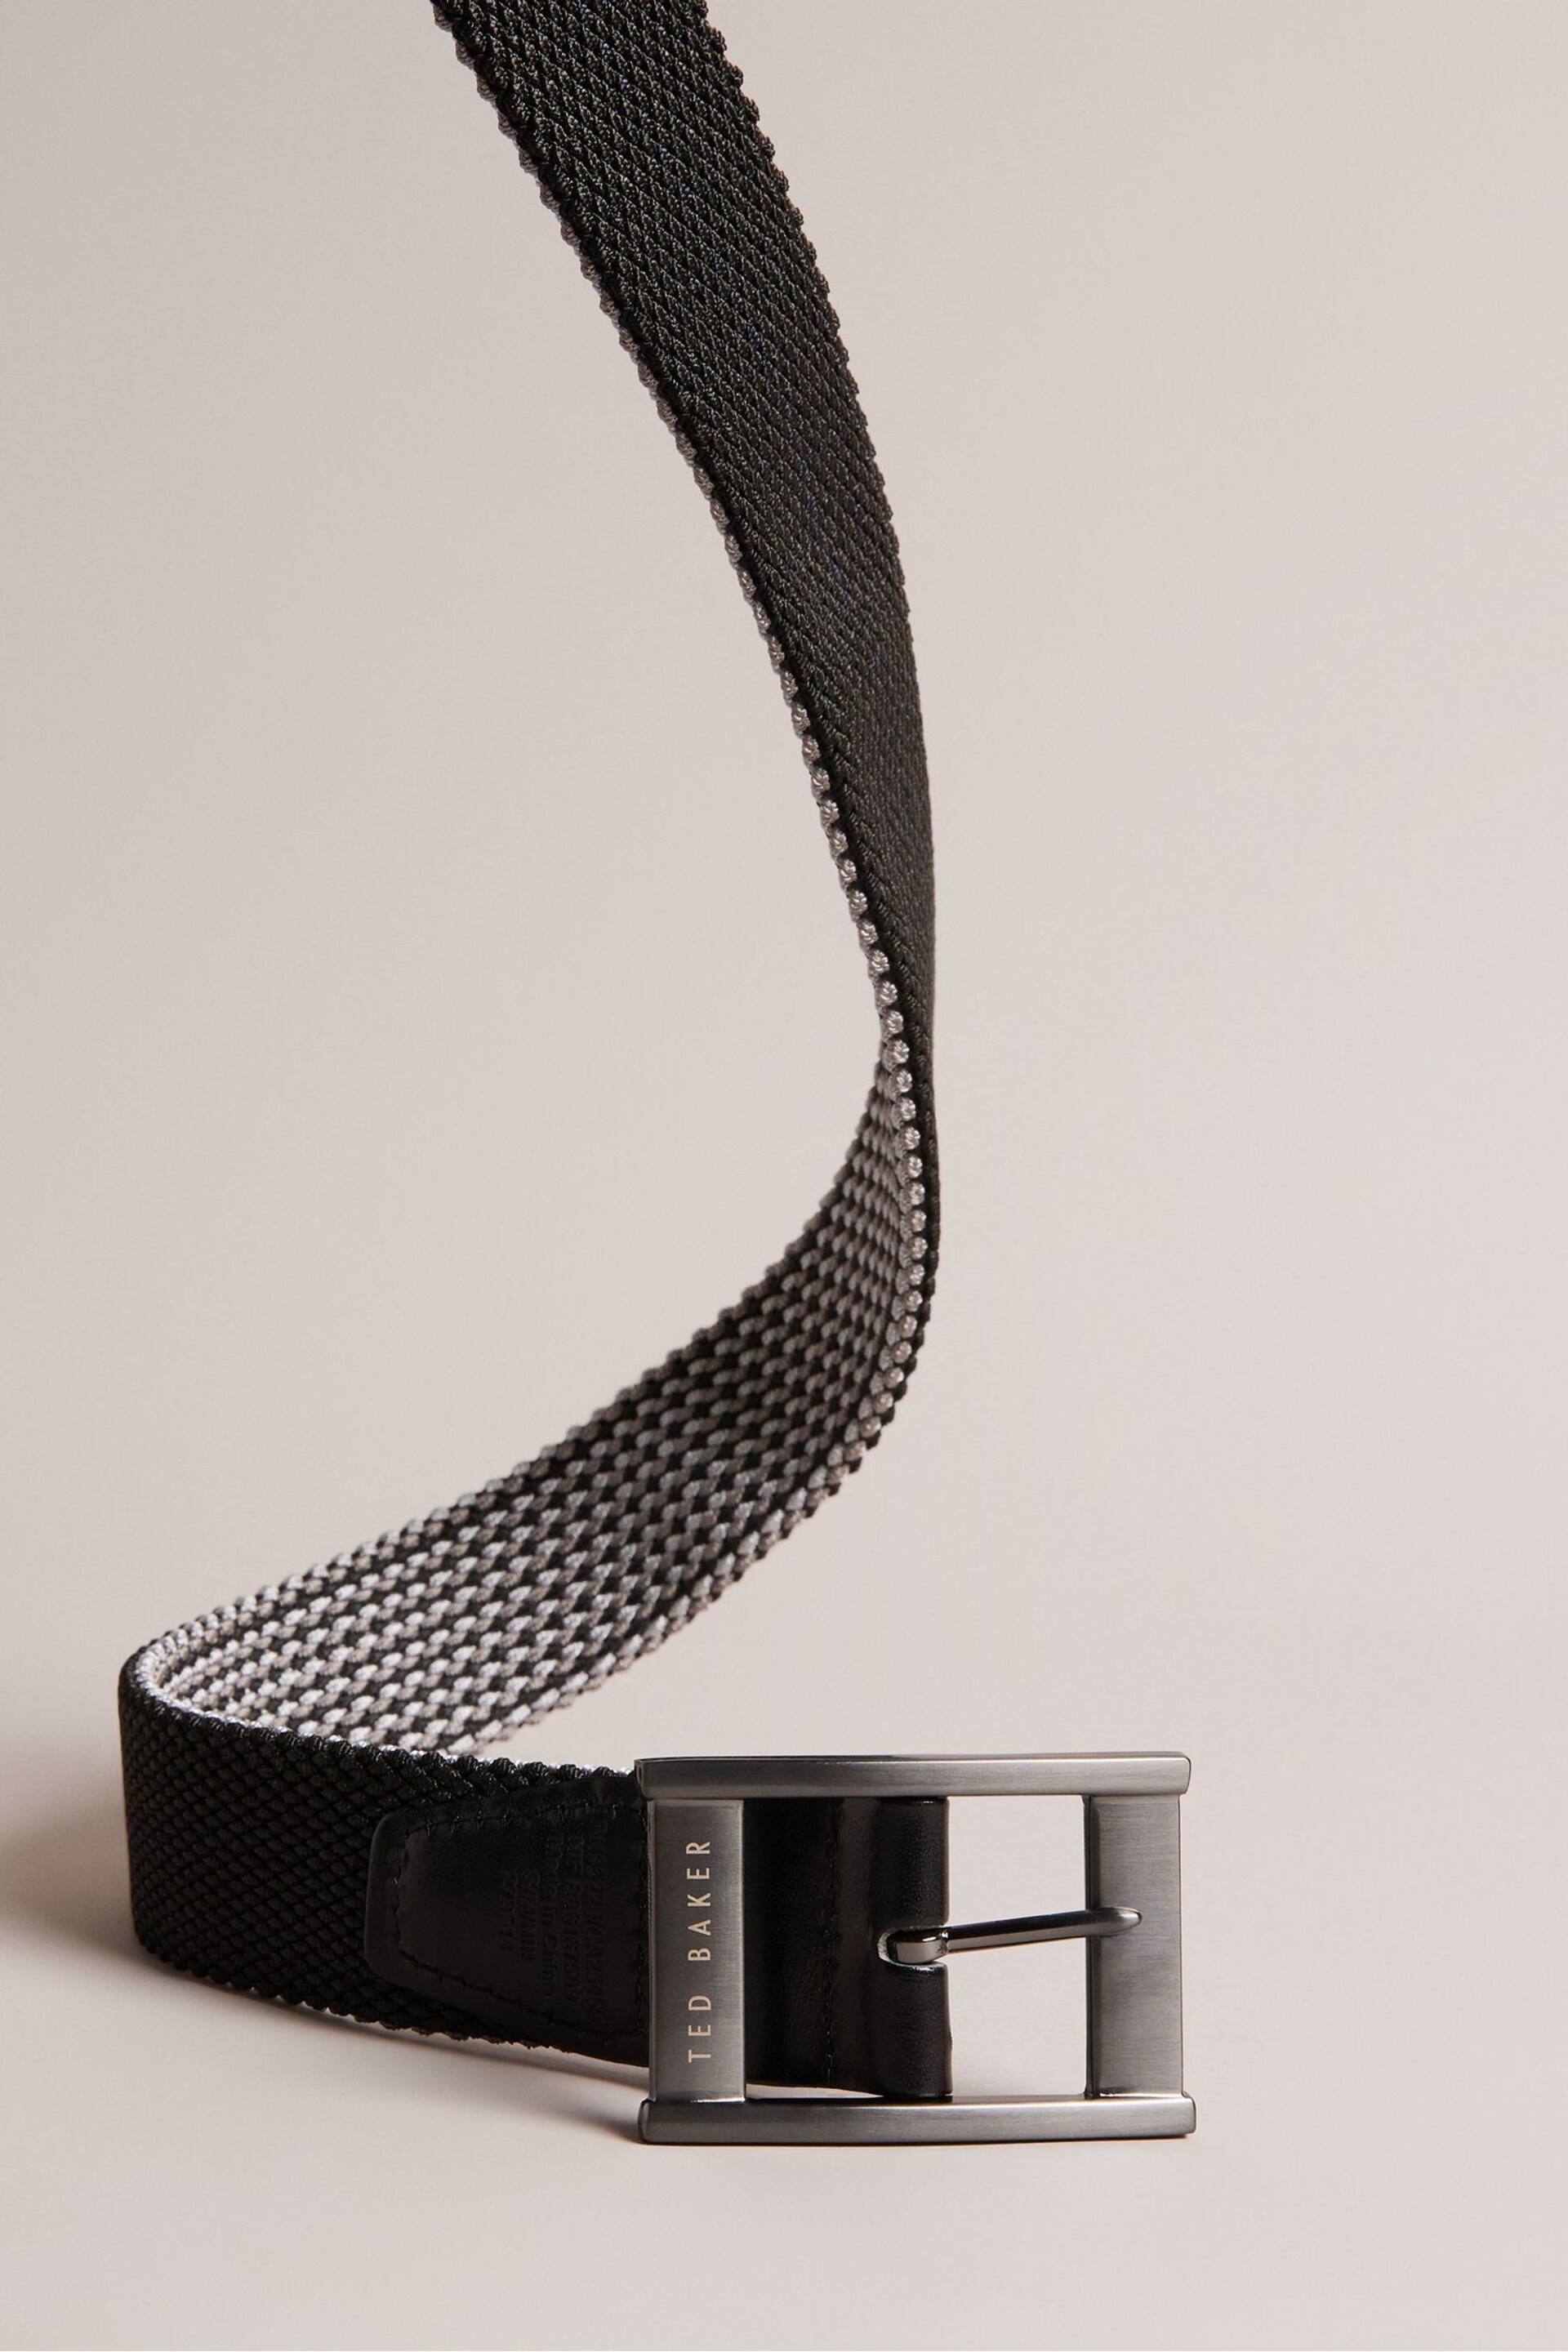 Ted Baker Black Columm Reversible Elastic Belt - Image 2 of 4